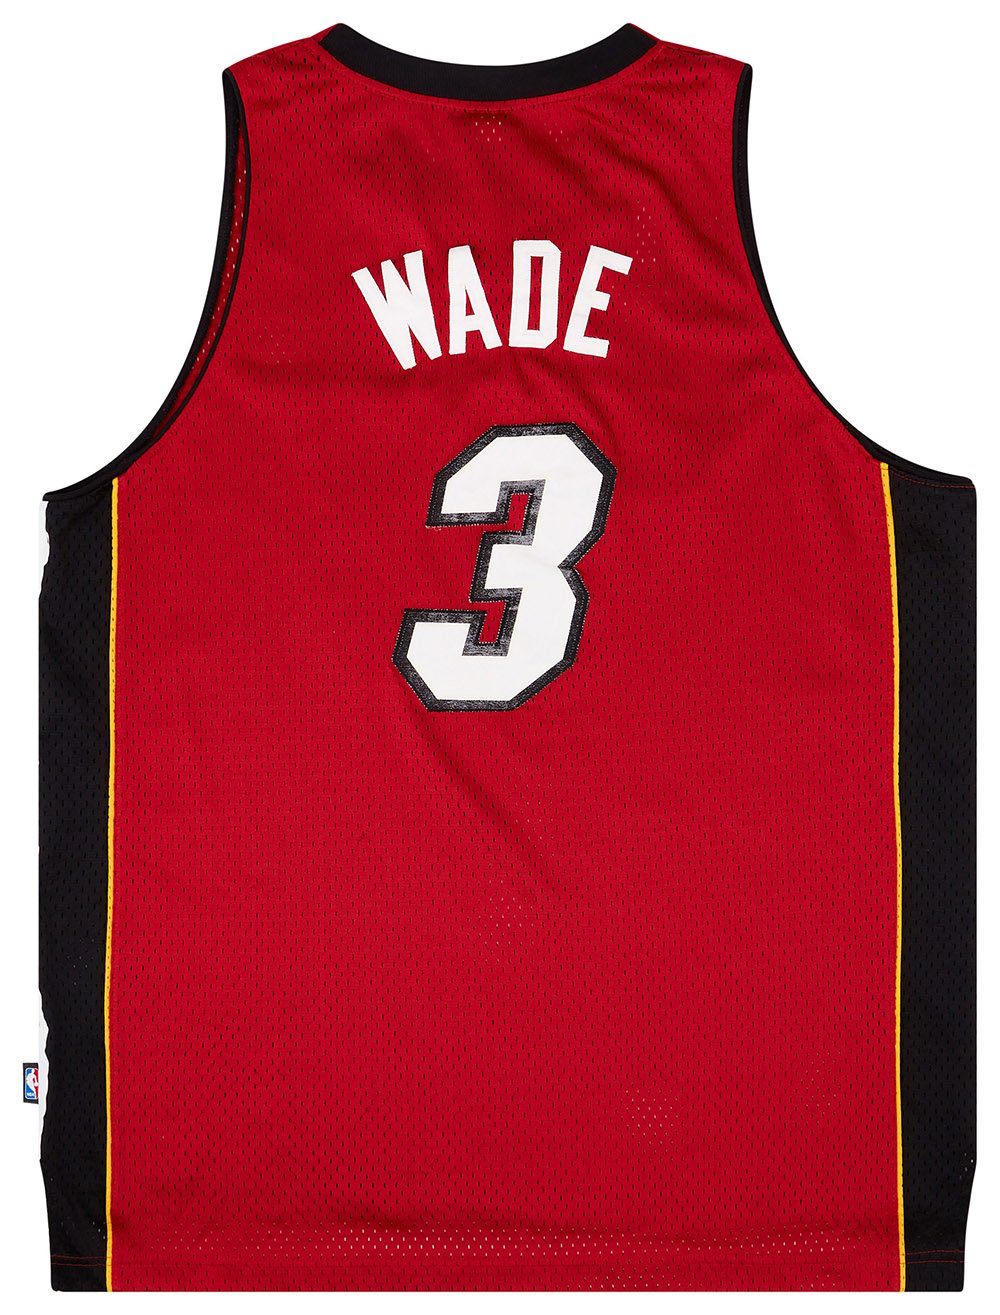 2004-06 Miami Heat Wade #3 Reebok Swingman Alternate Jersey (Very Good) XL